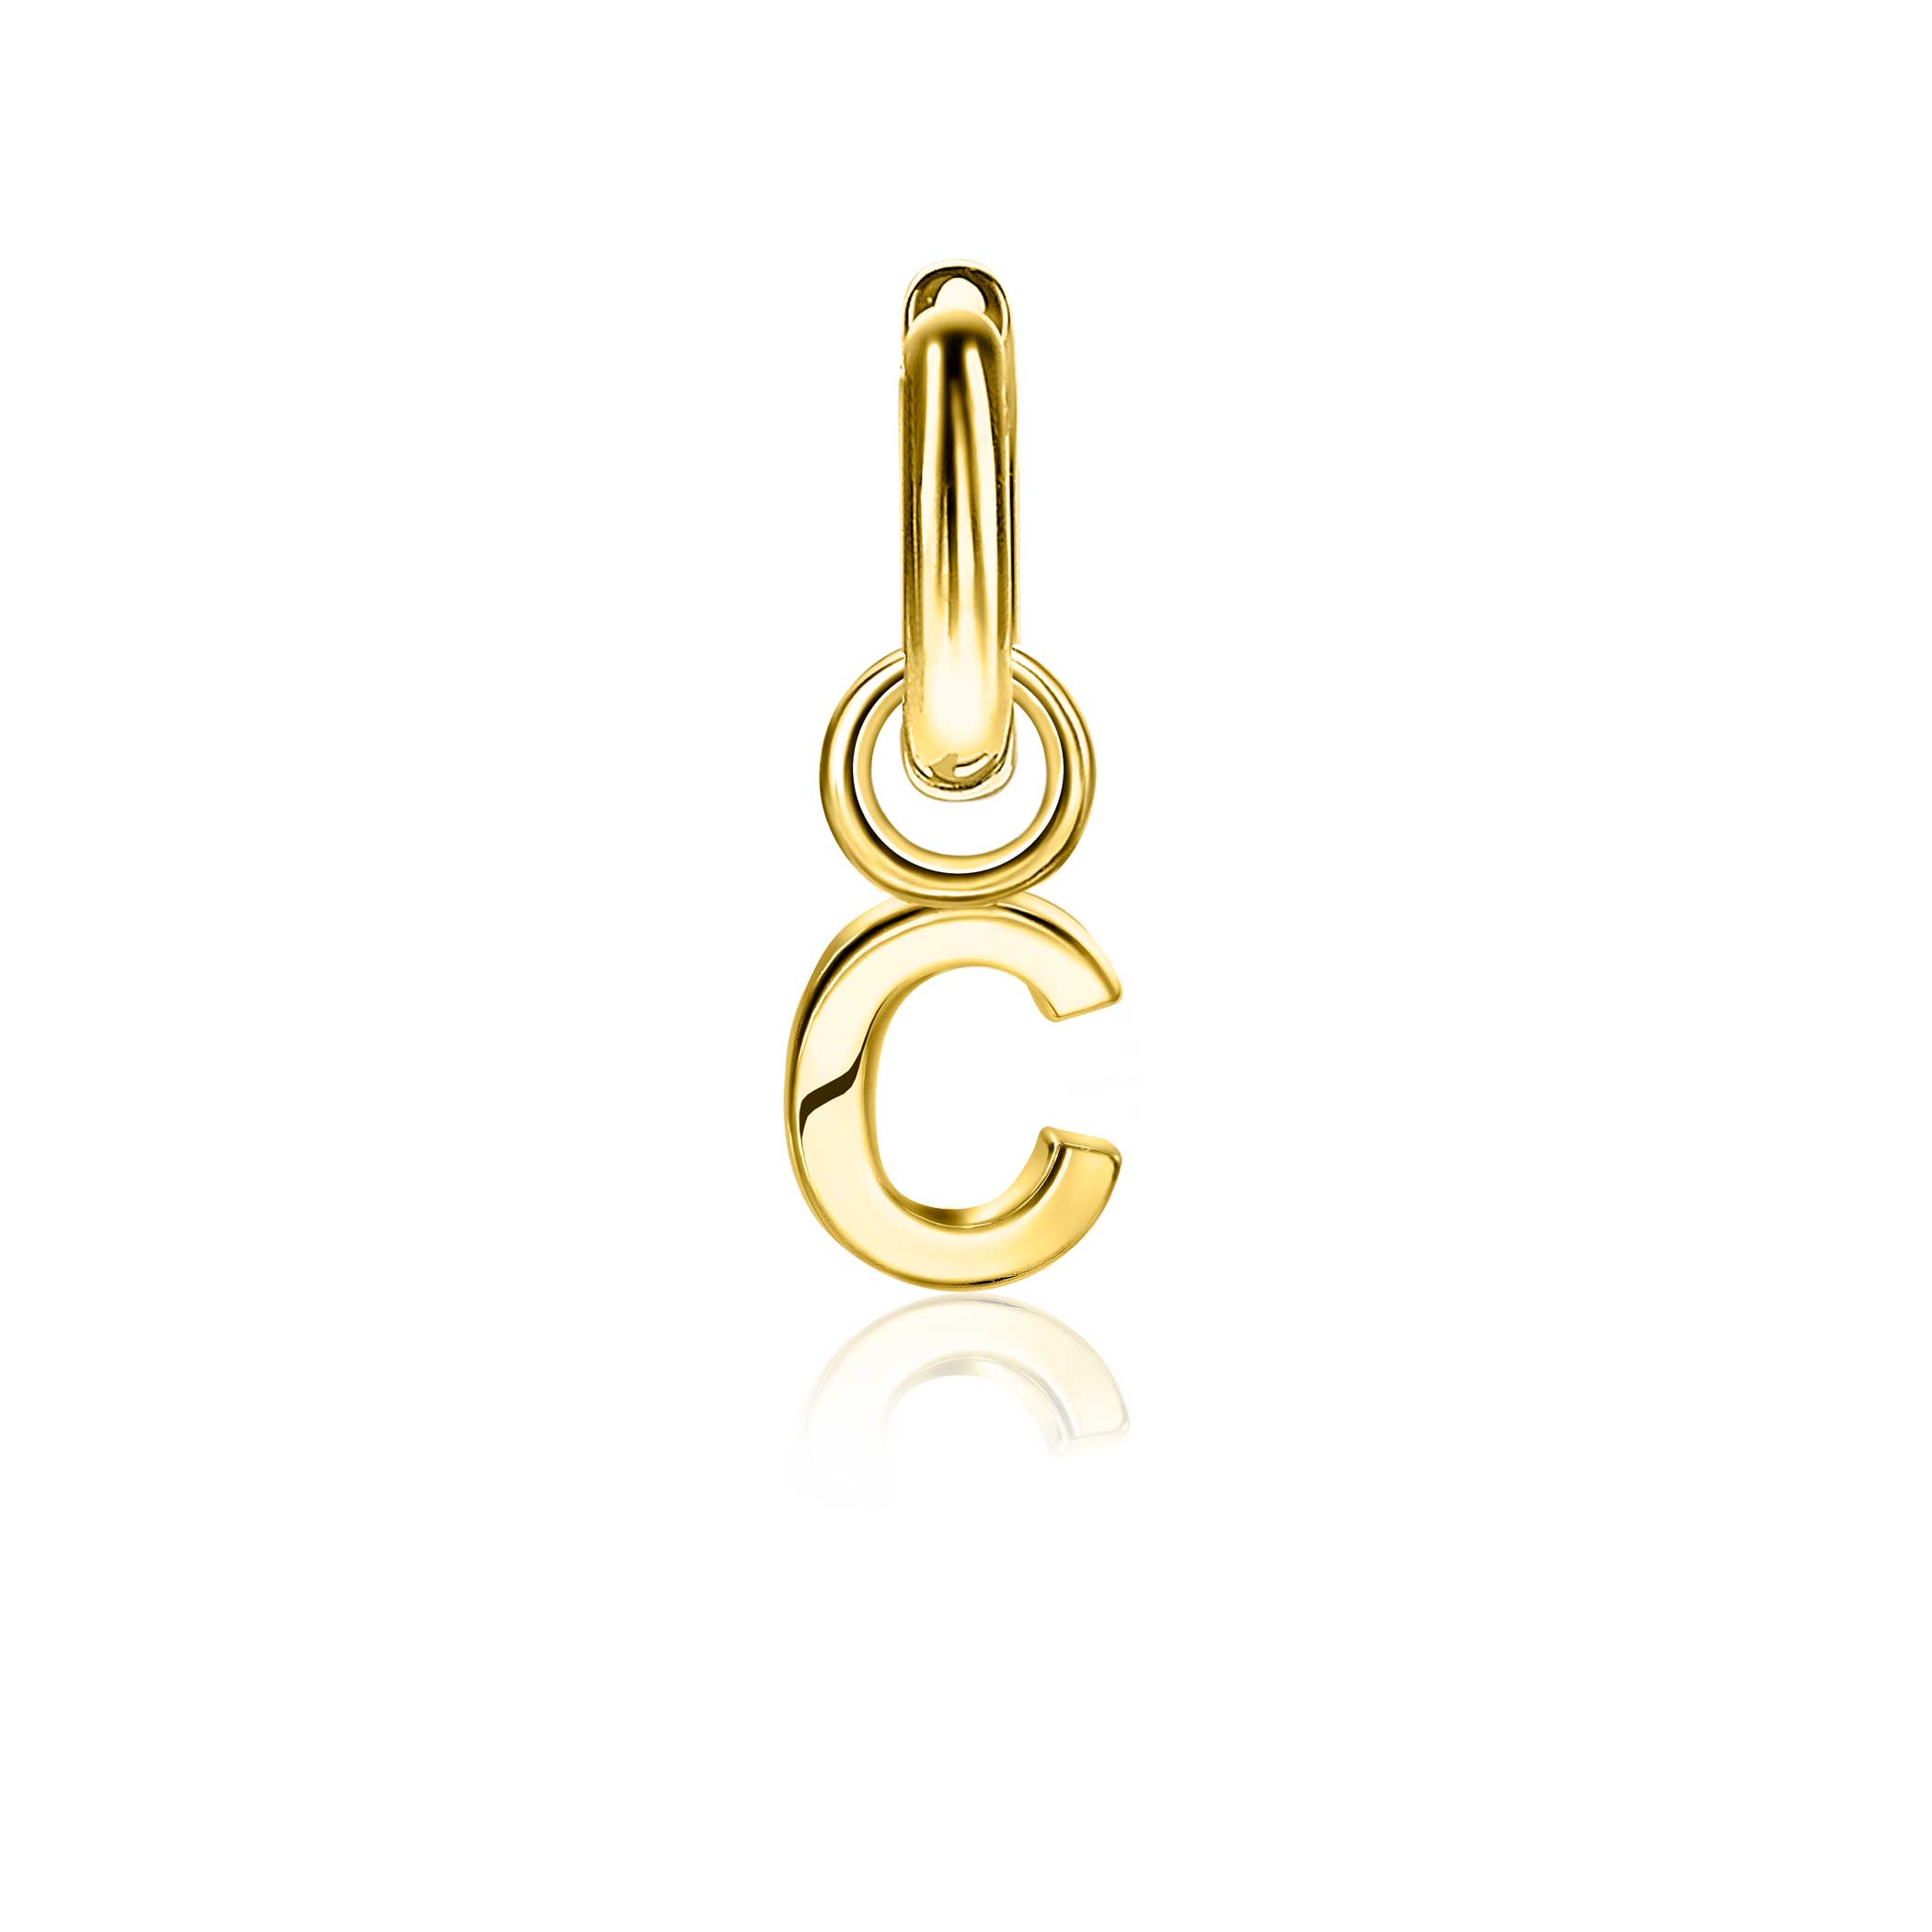 ZINZI Gold Plated Letter Earrings Pendant C price per piece ZICH2145C (excl. hoop earrings)